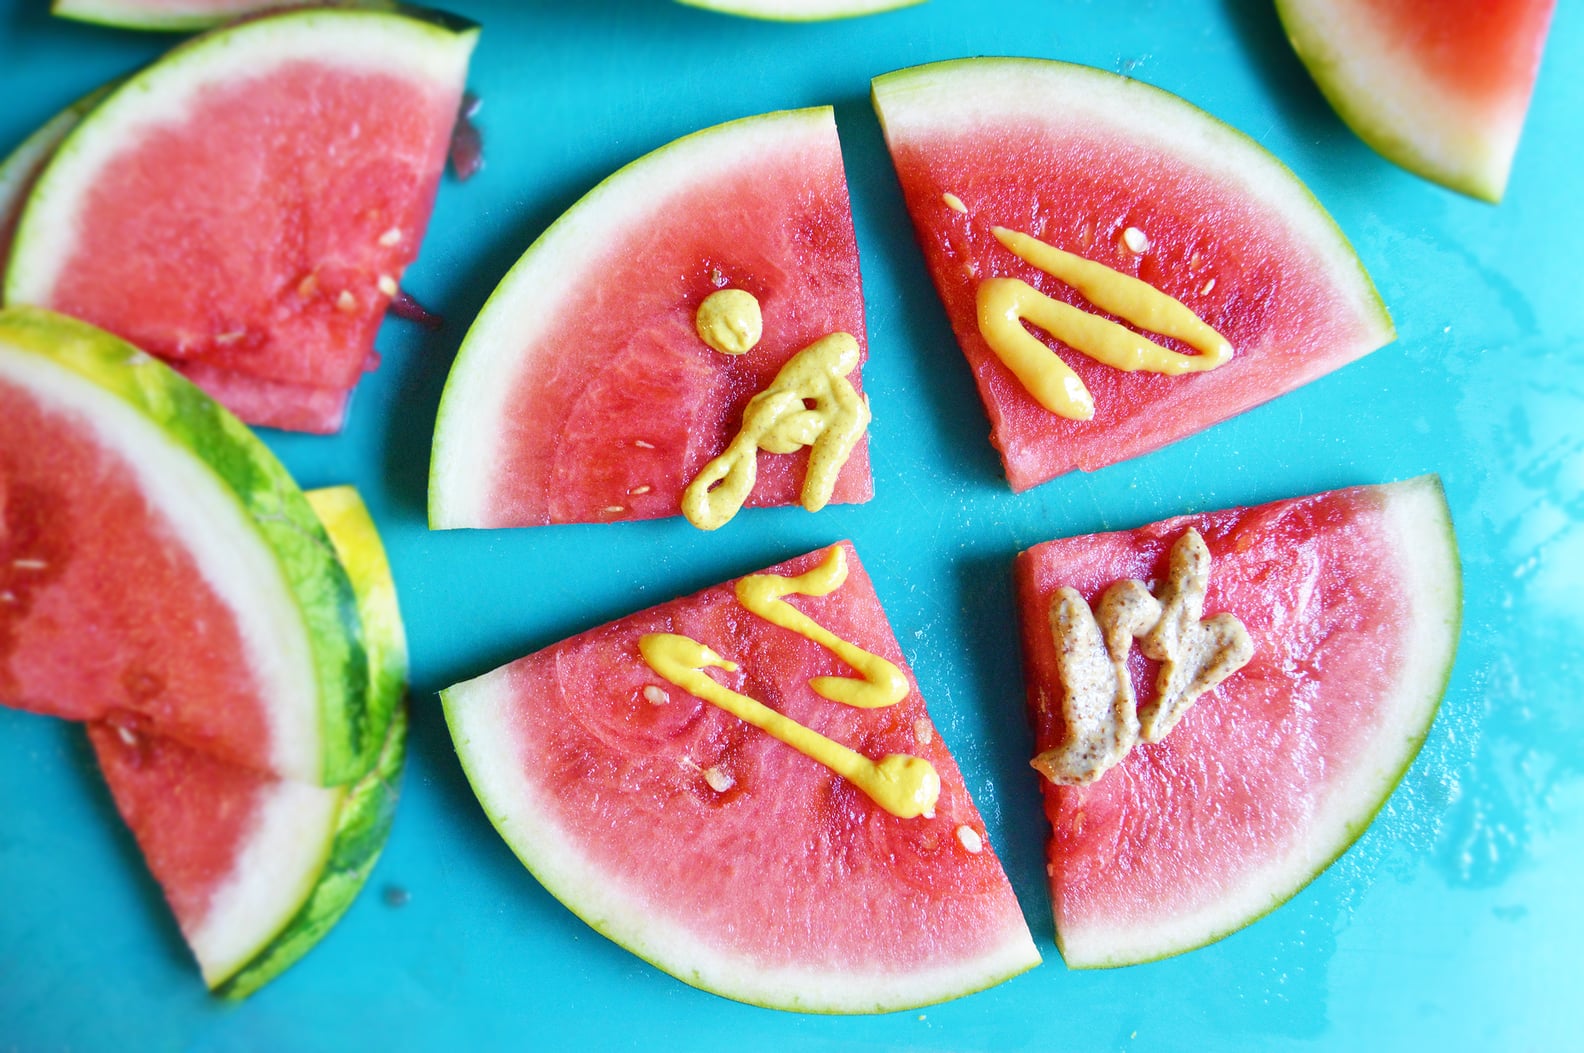 Watermelon With Mustard Is Trending on TikTok | POPSUGAR Food